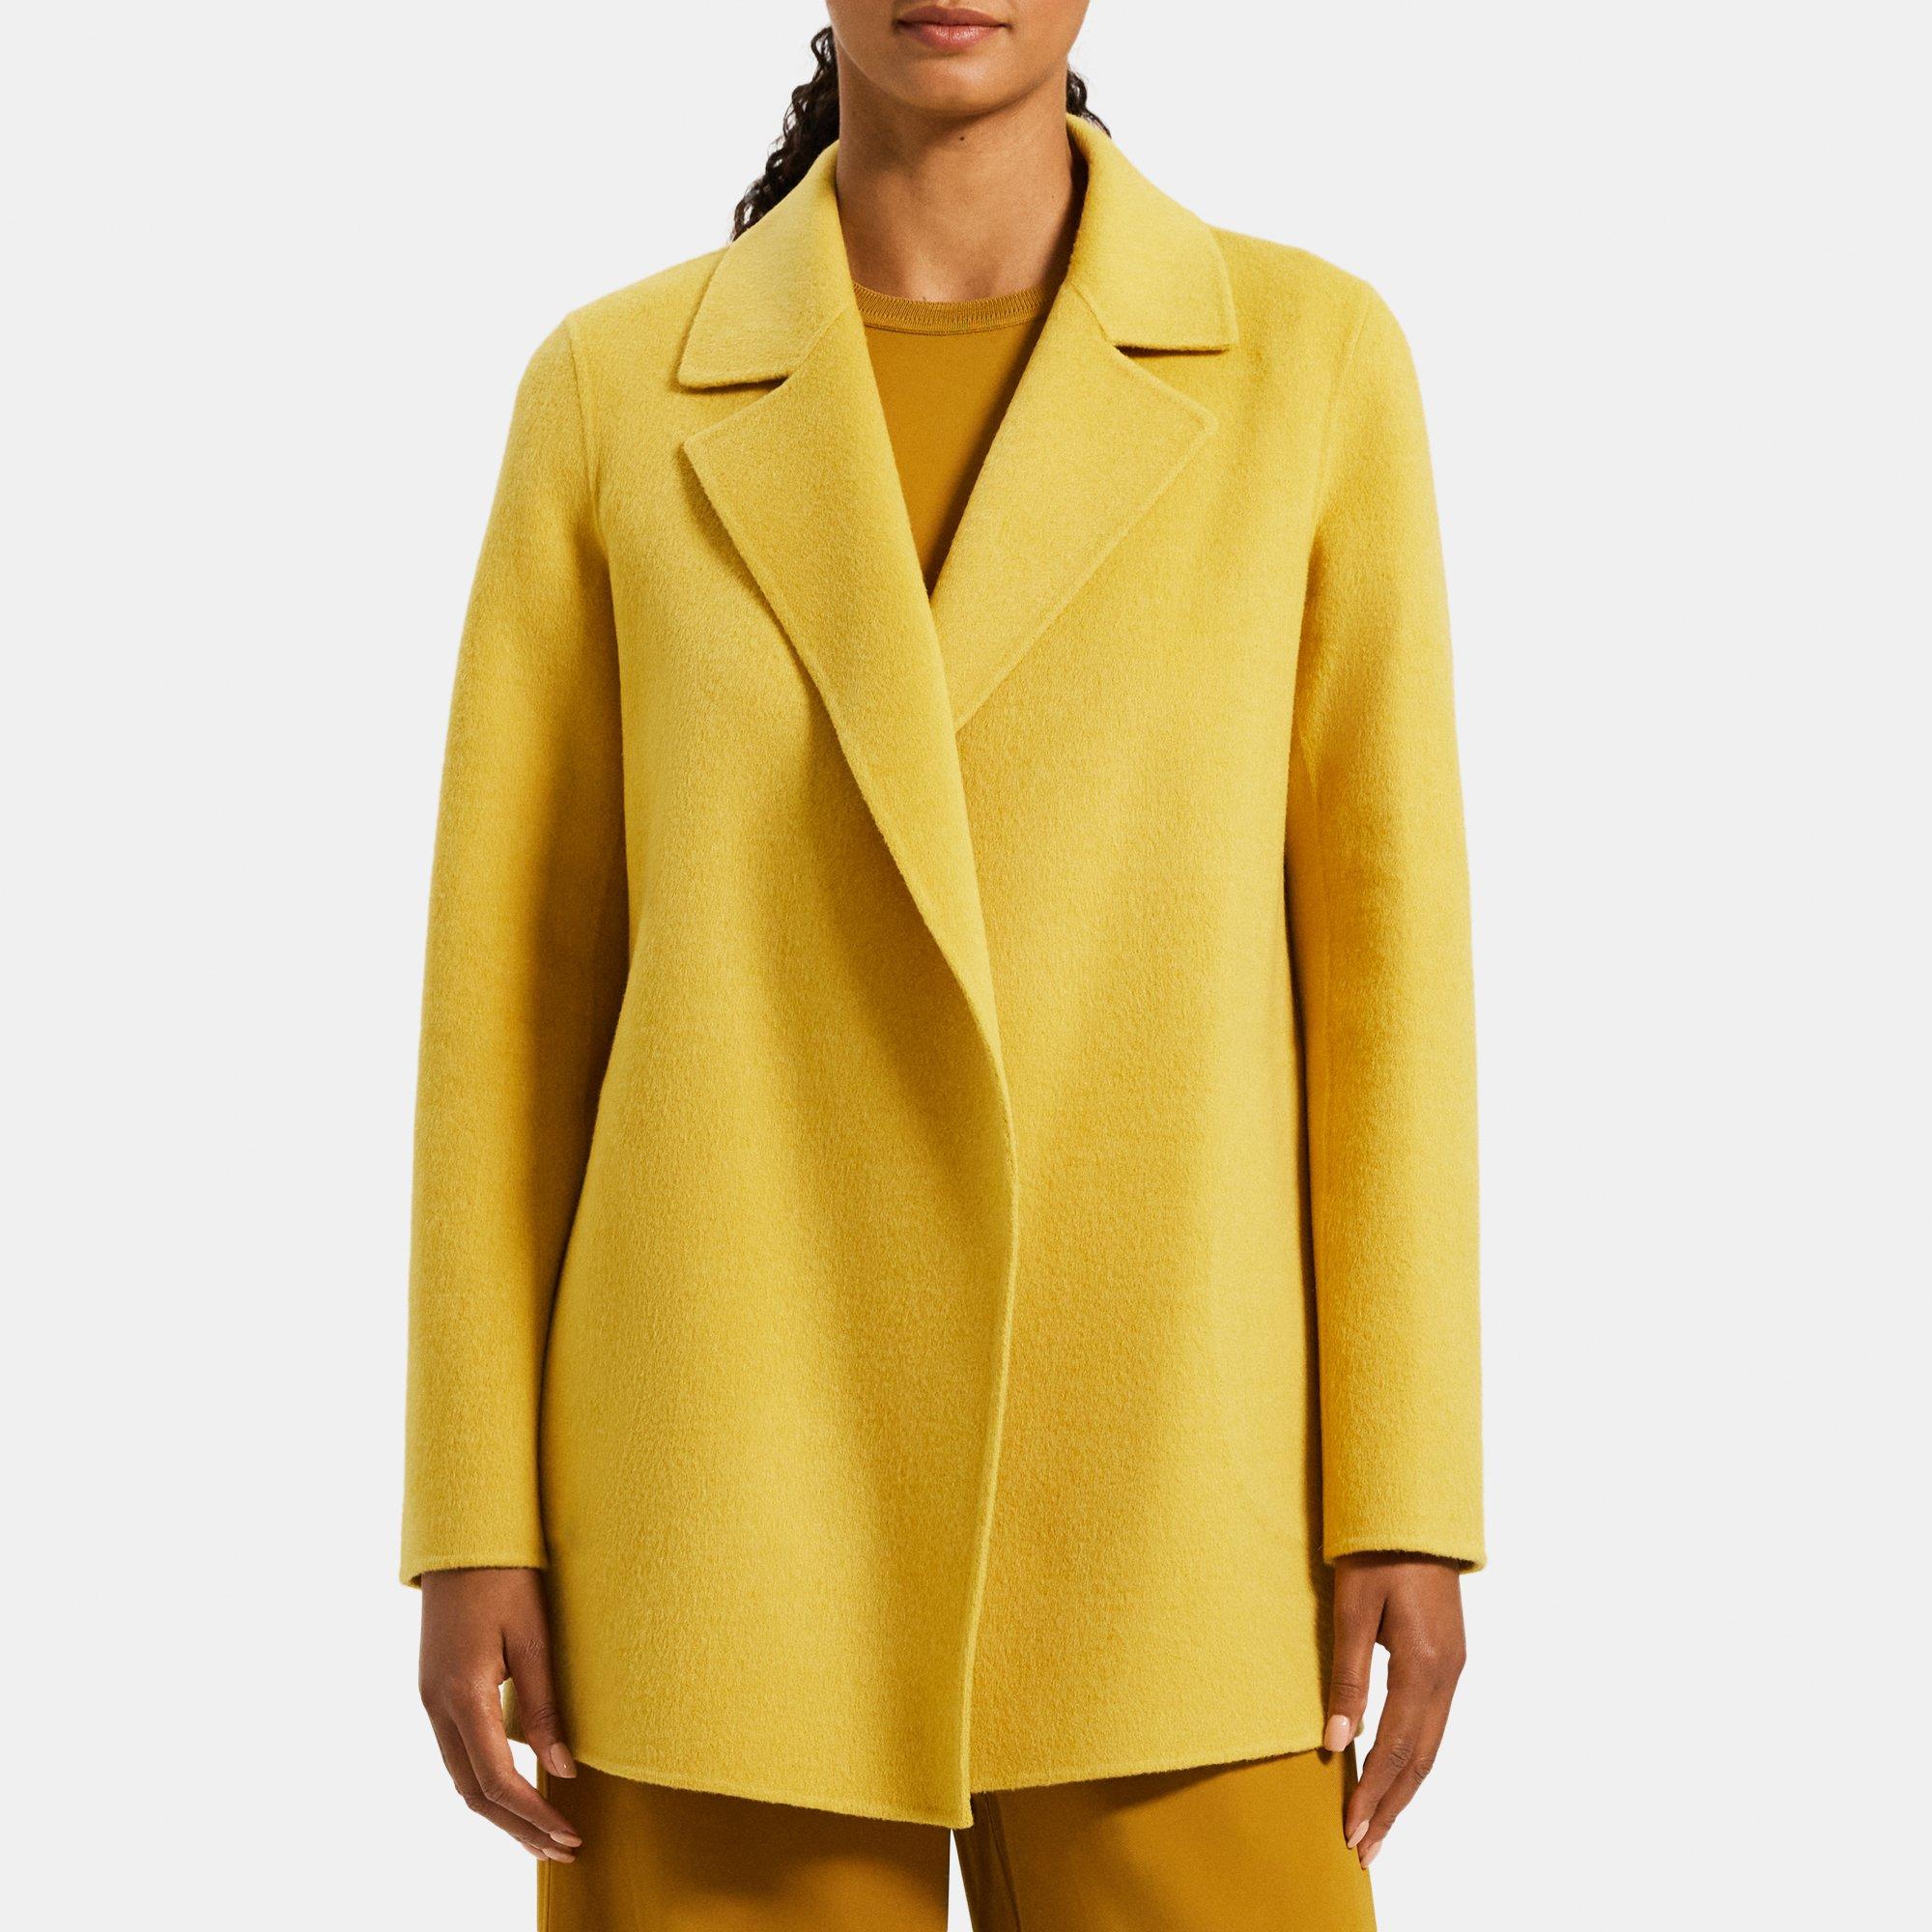 Double Faced Reversible Beige/ Light Yellow Coat - Lana Ricca